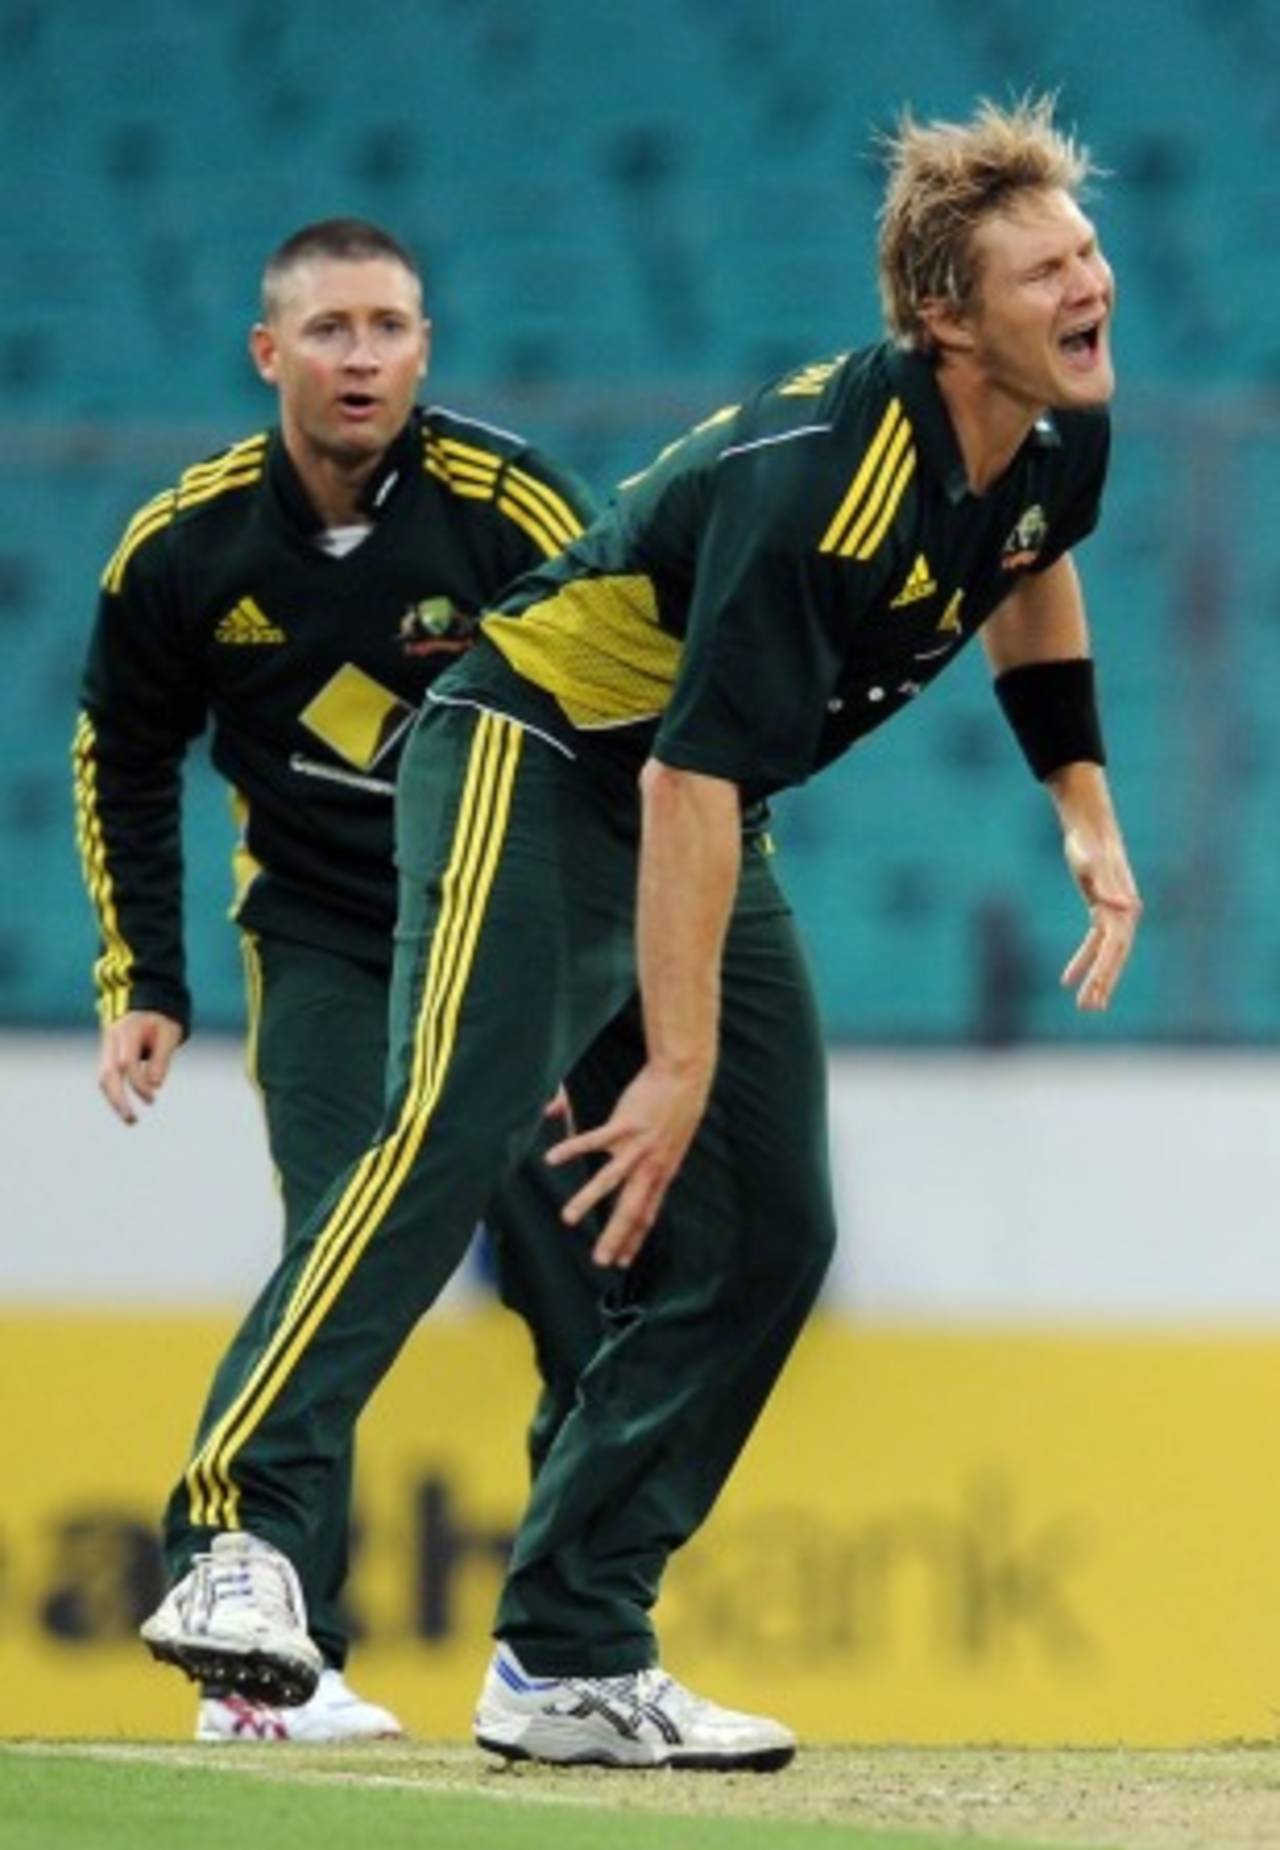 Shane Watson writhes in pain after Michael Clarke's shy at the stumps hit him on the leg, Australia v Sri Lanka, 2nd ODI, Sydney, November 5, 2010